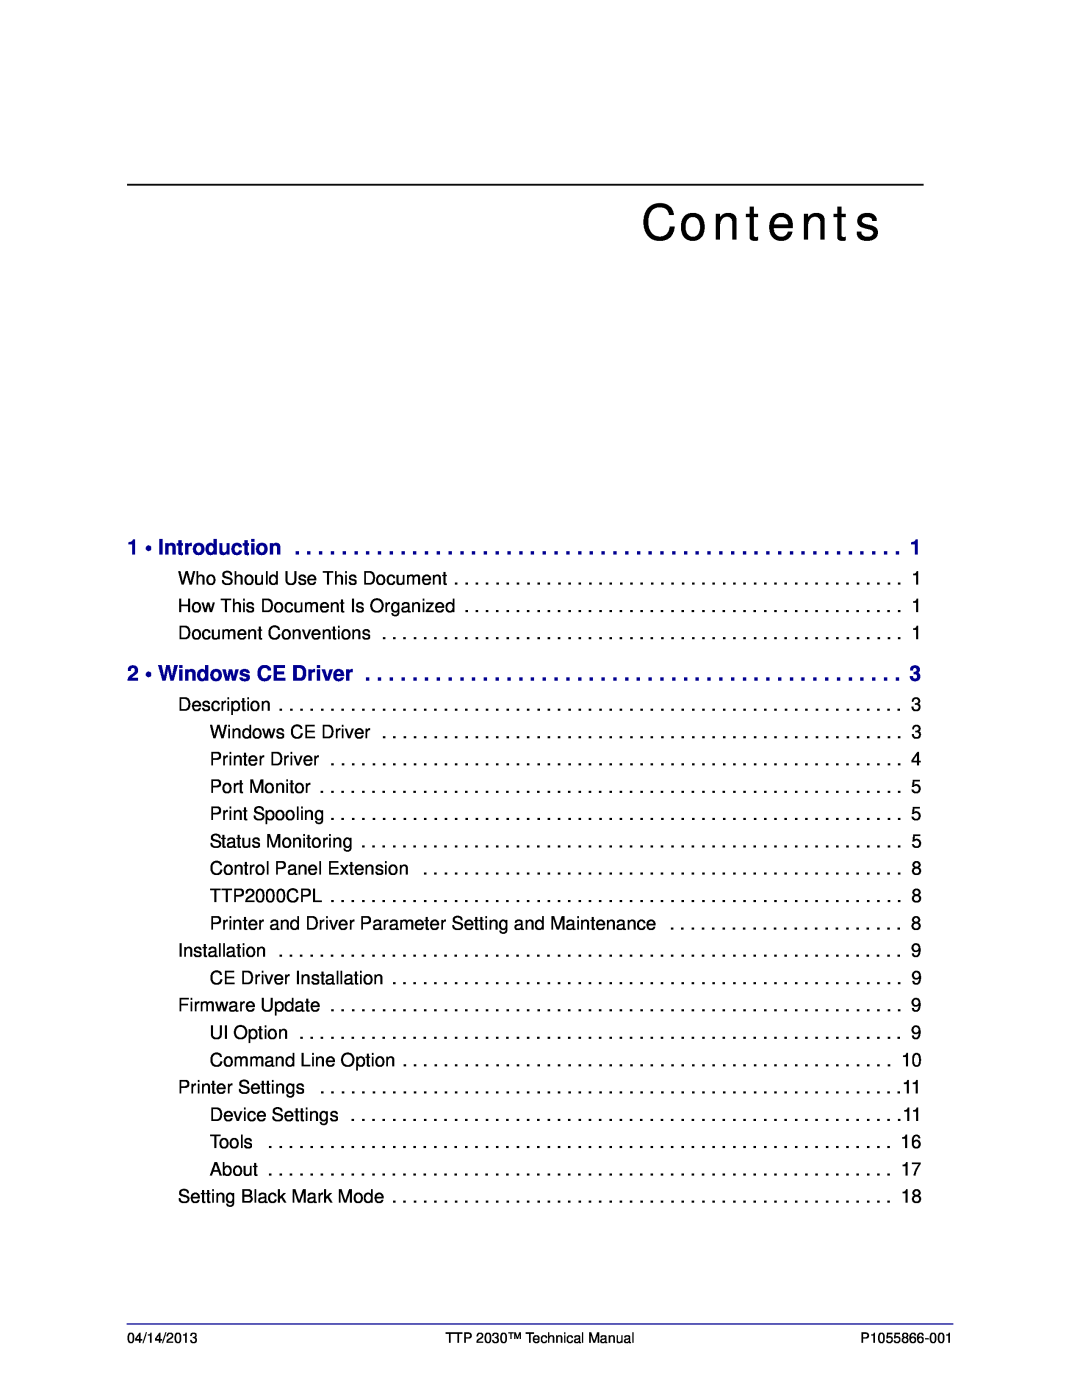 Zebra Technologies TTP 2030 manual Contents, Introduction, Windows CE Driver 